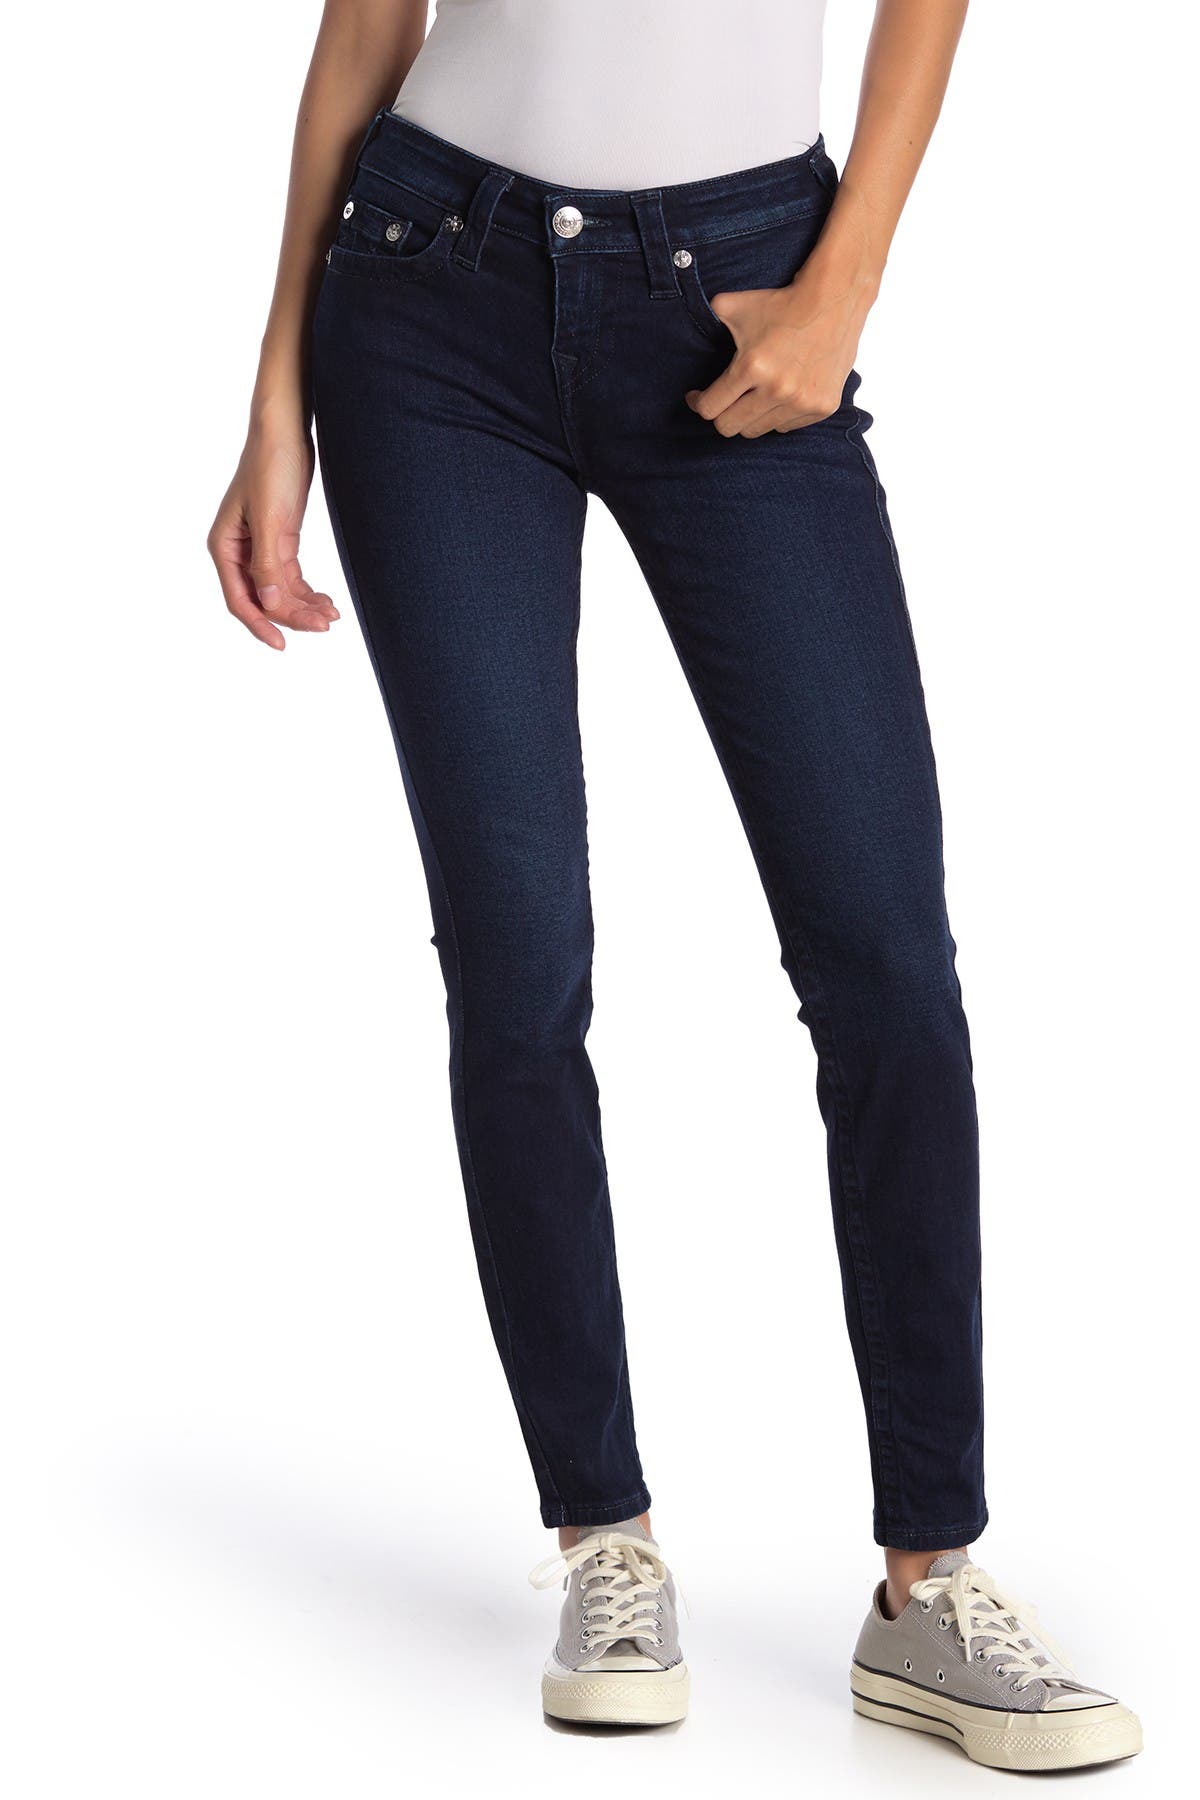 nordstrom rack true religion womens jeans